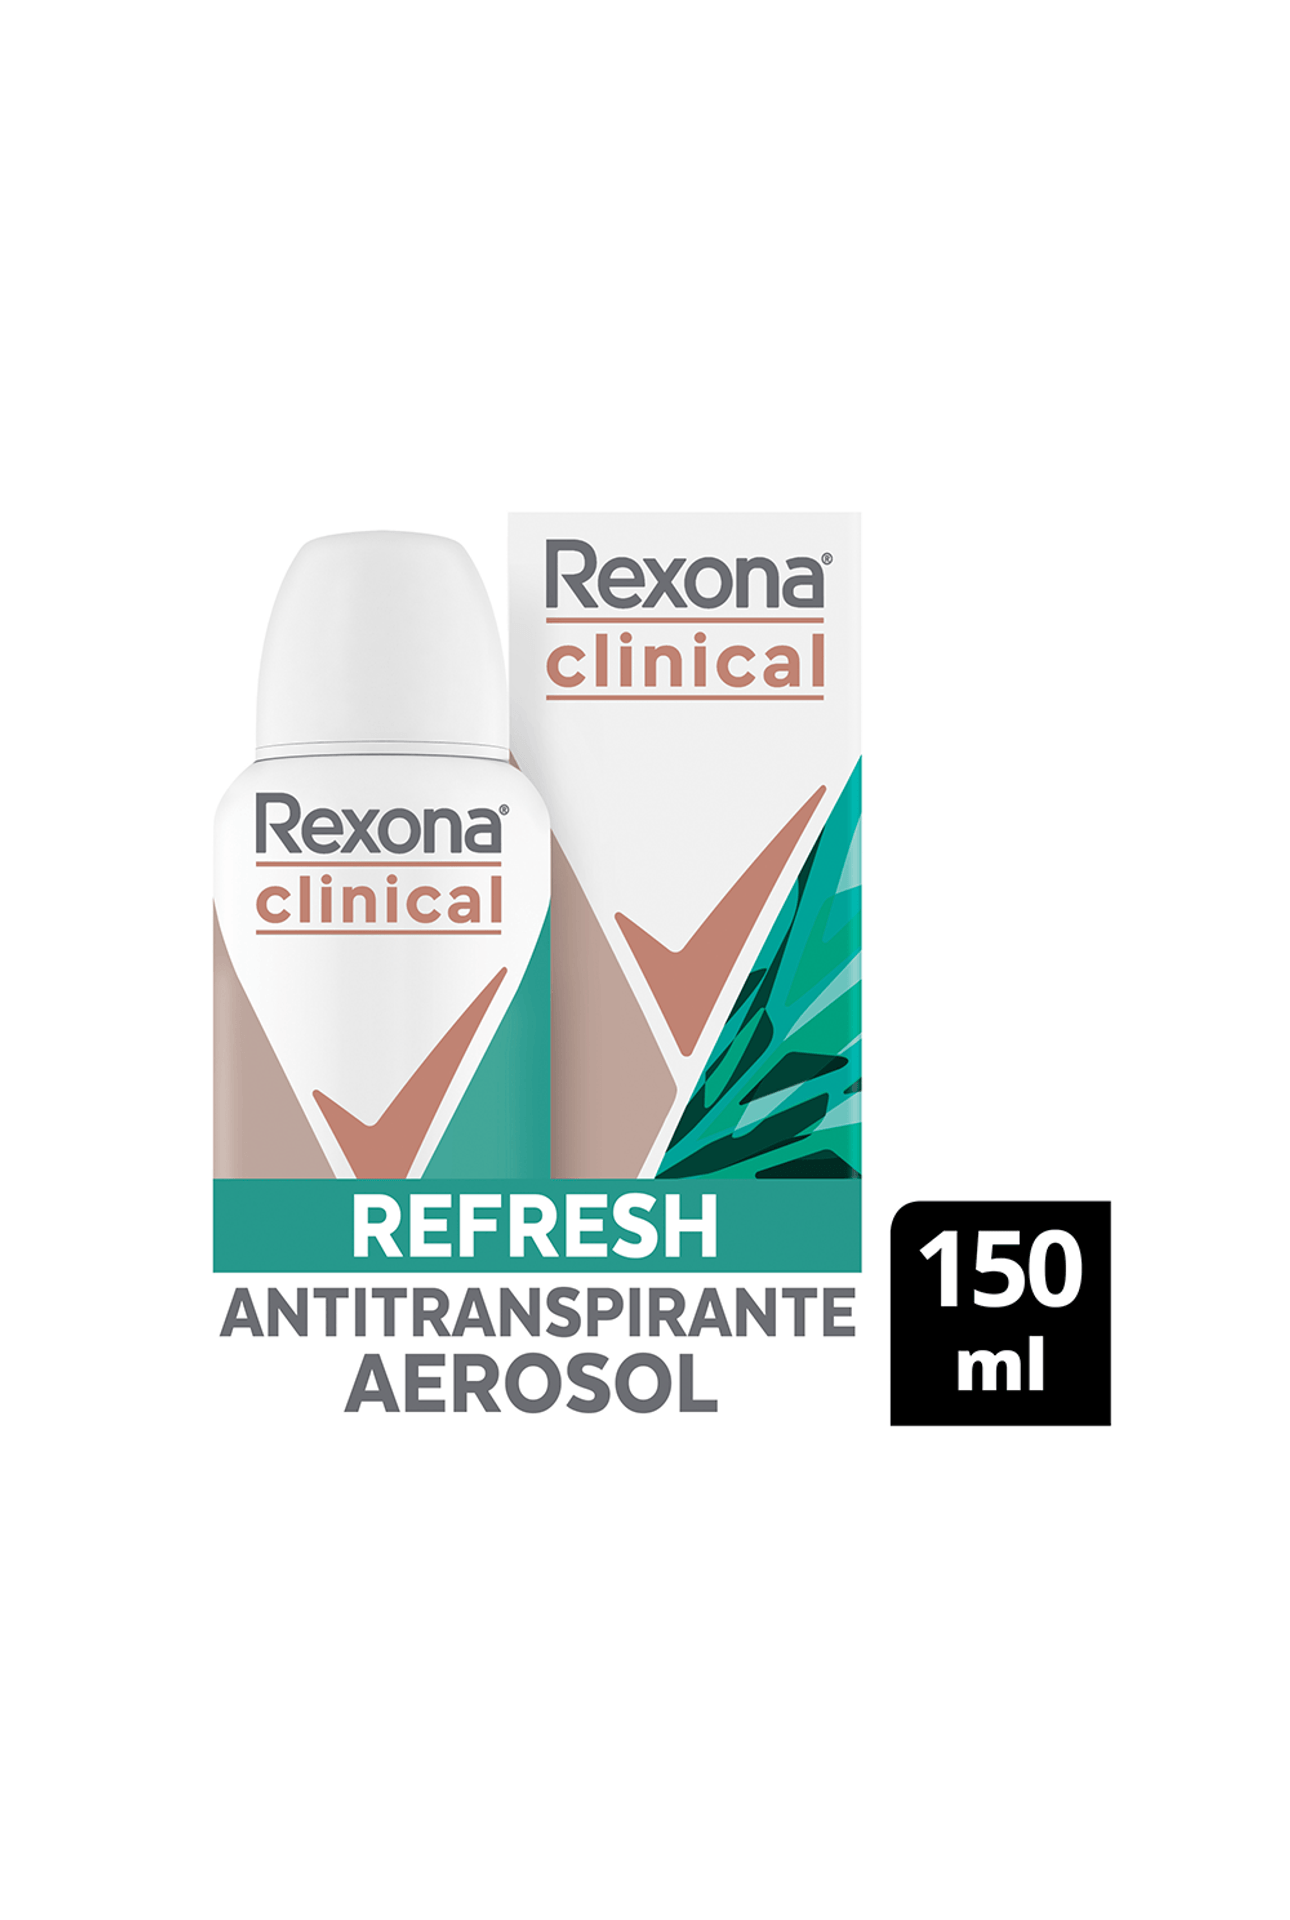 Rexona-Antitranspirante-en-aerosol-Rexona-Clinical-Refresh-x-150-ml-7891150089952_img1